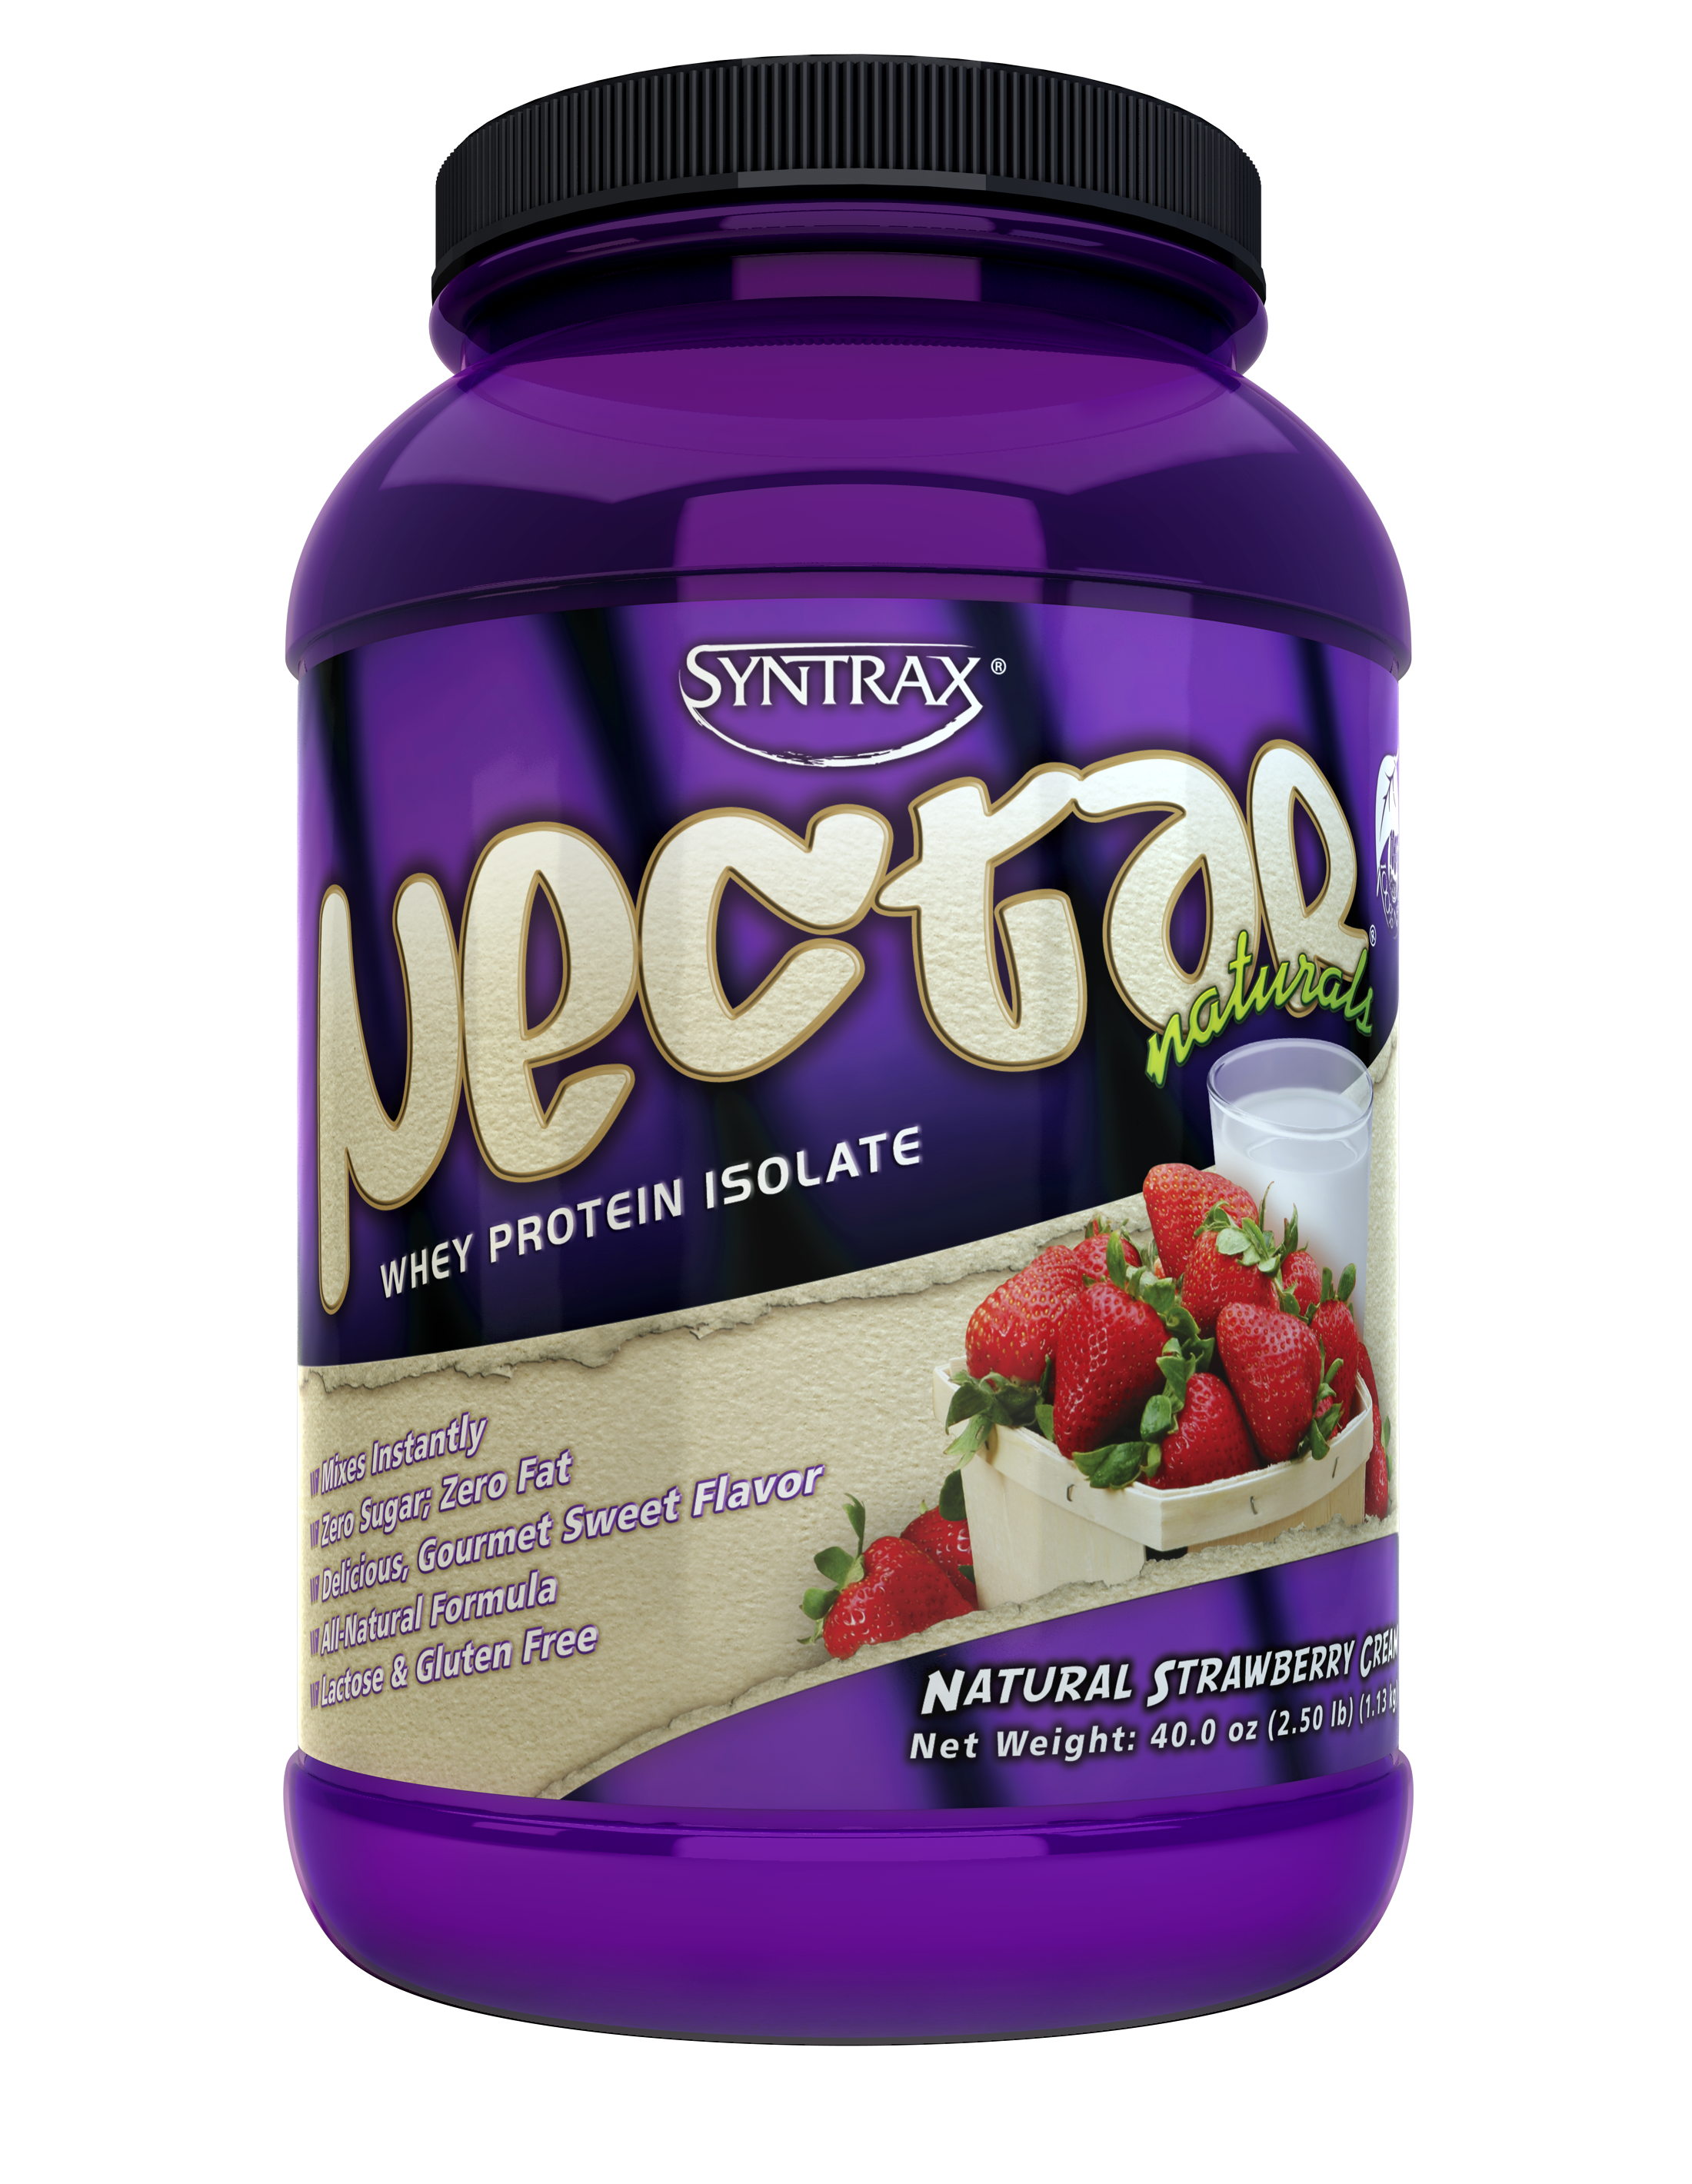 Syntrax Nectar Naturals - Natural Strawberry Cream 2 lb